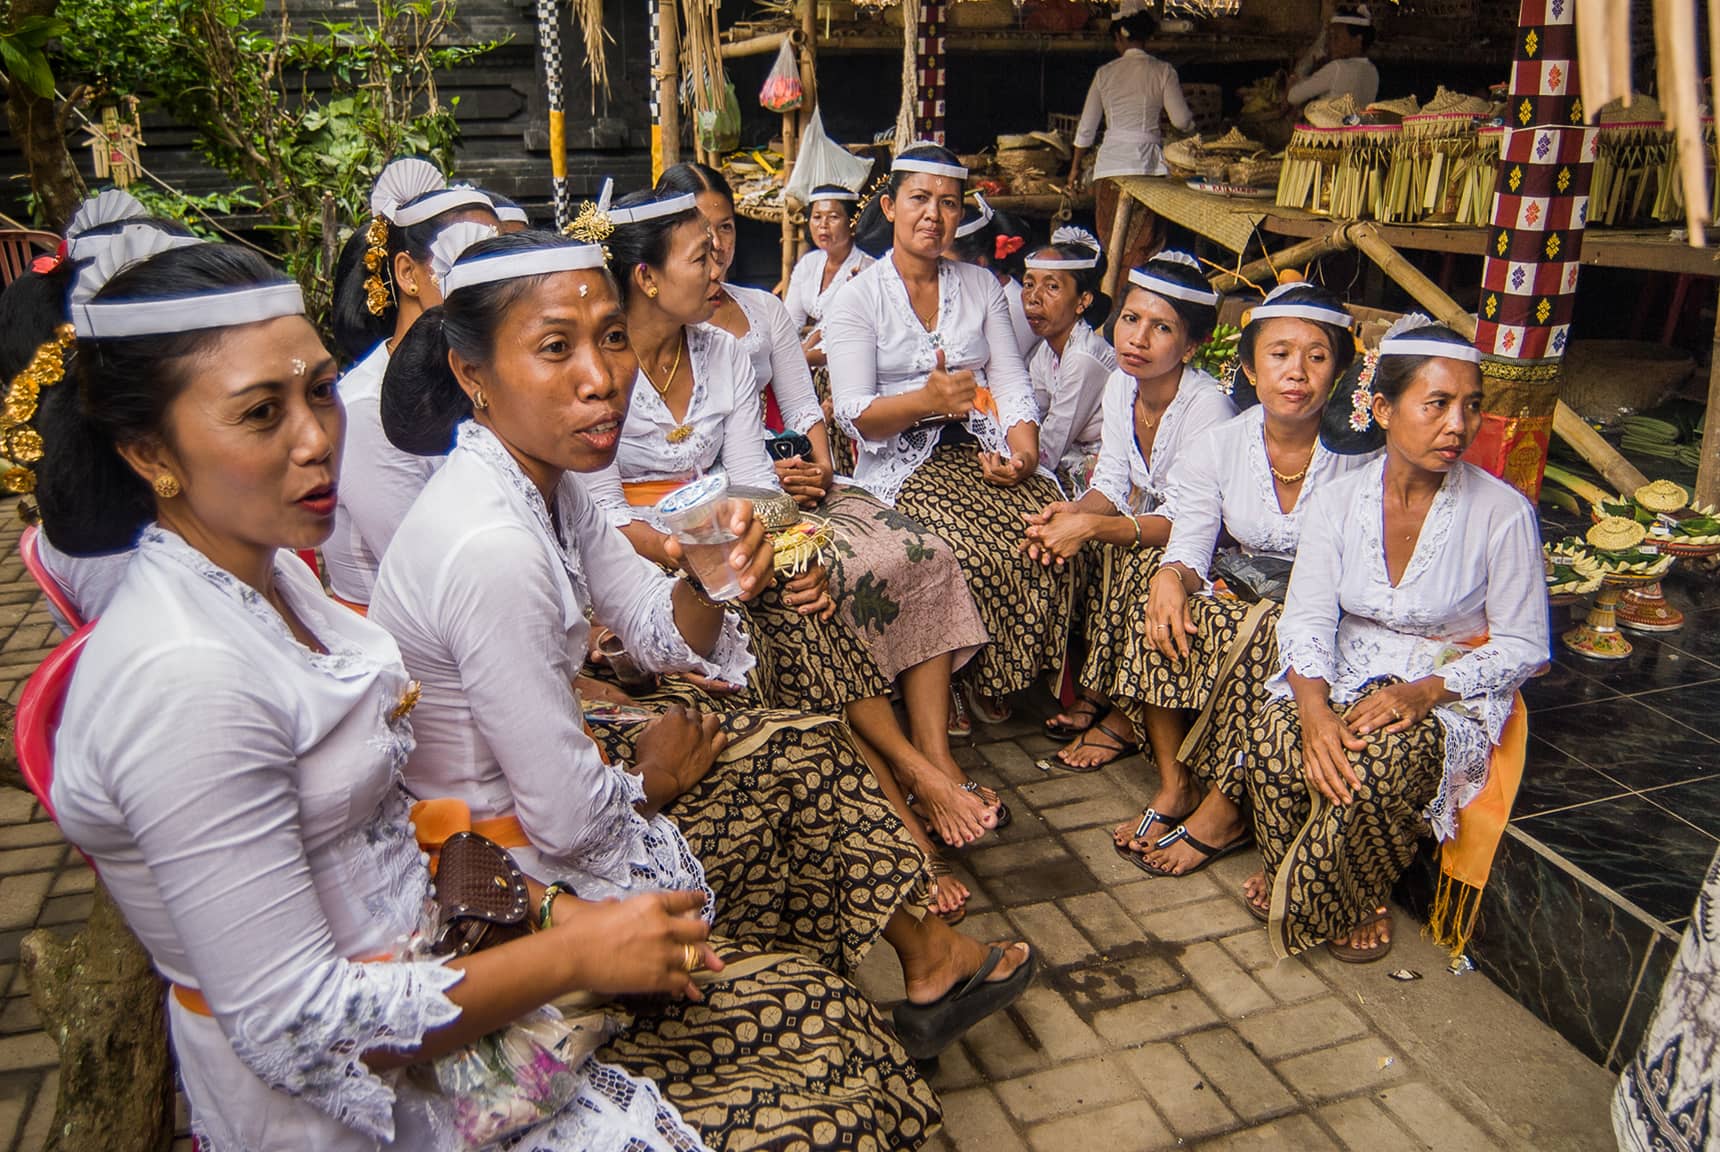 Professional photos of Hindu ceremonies in Bali Indonesia